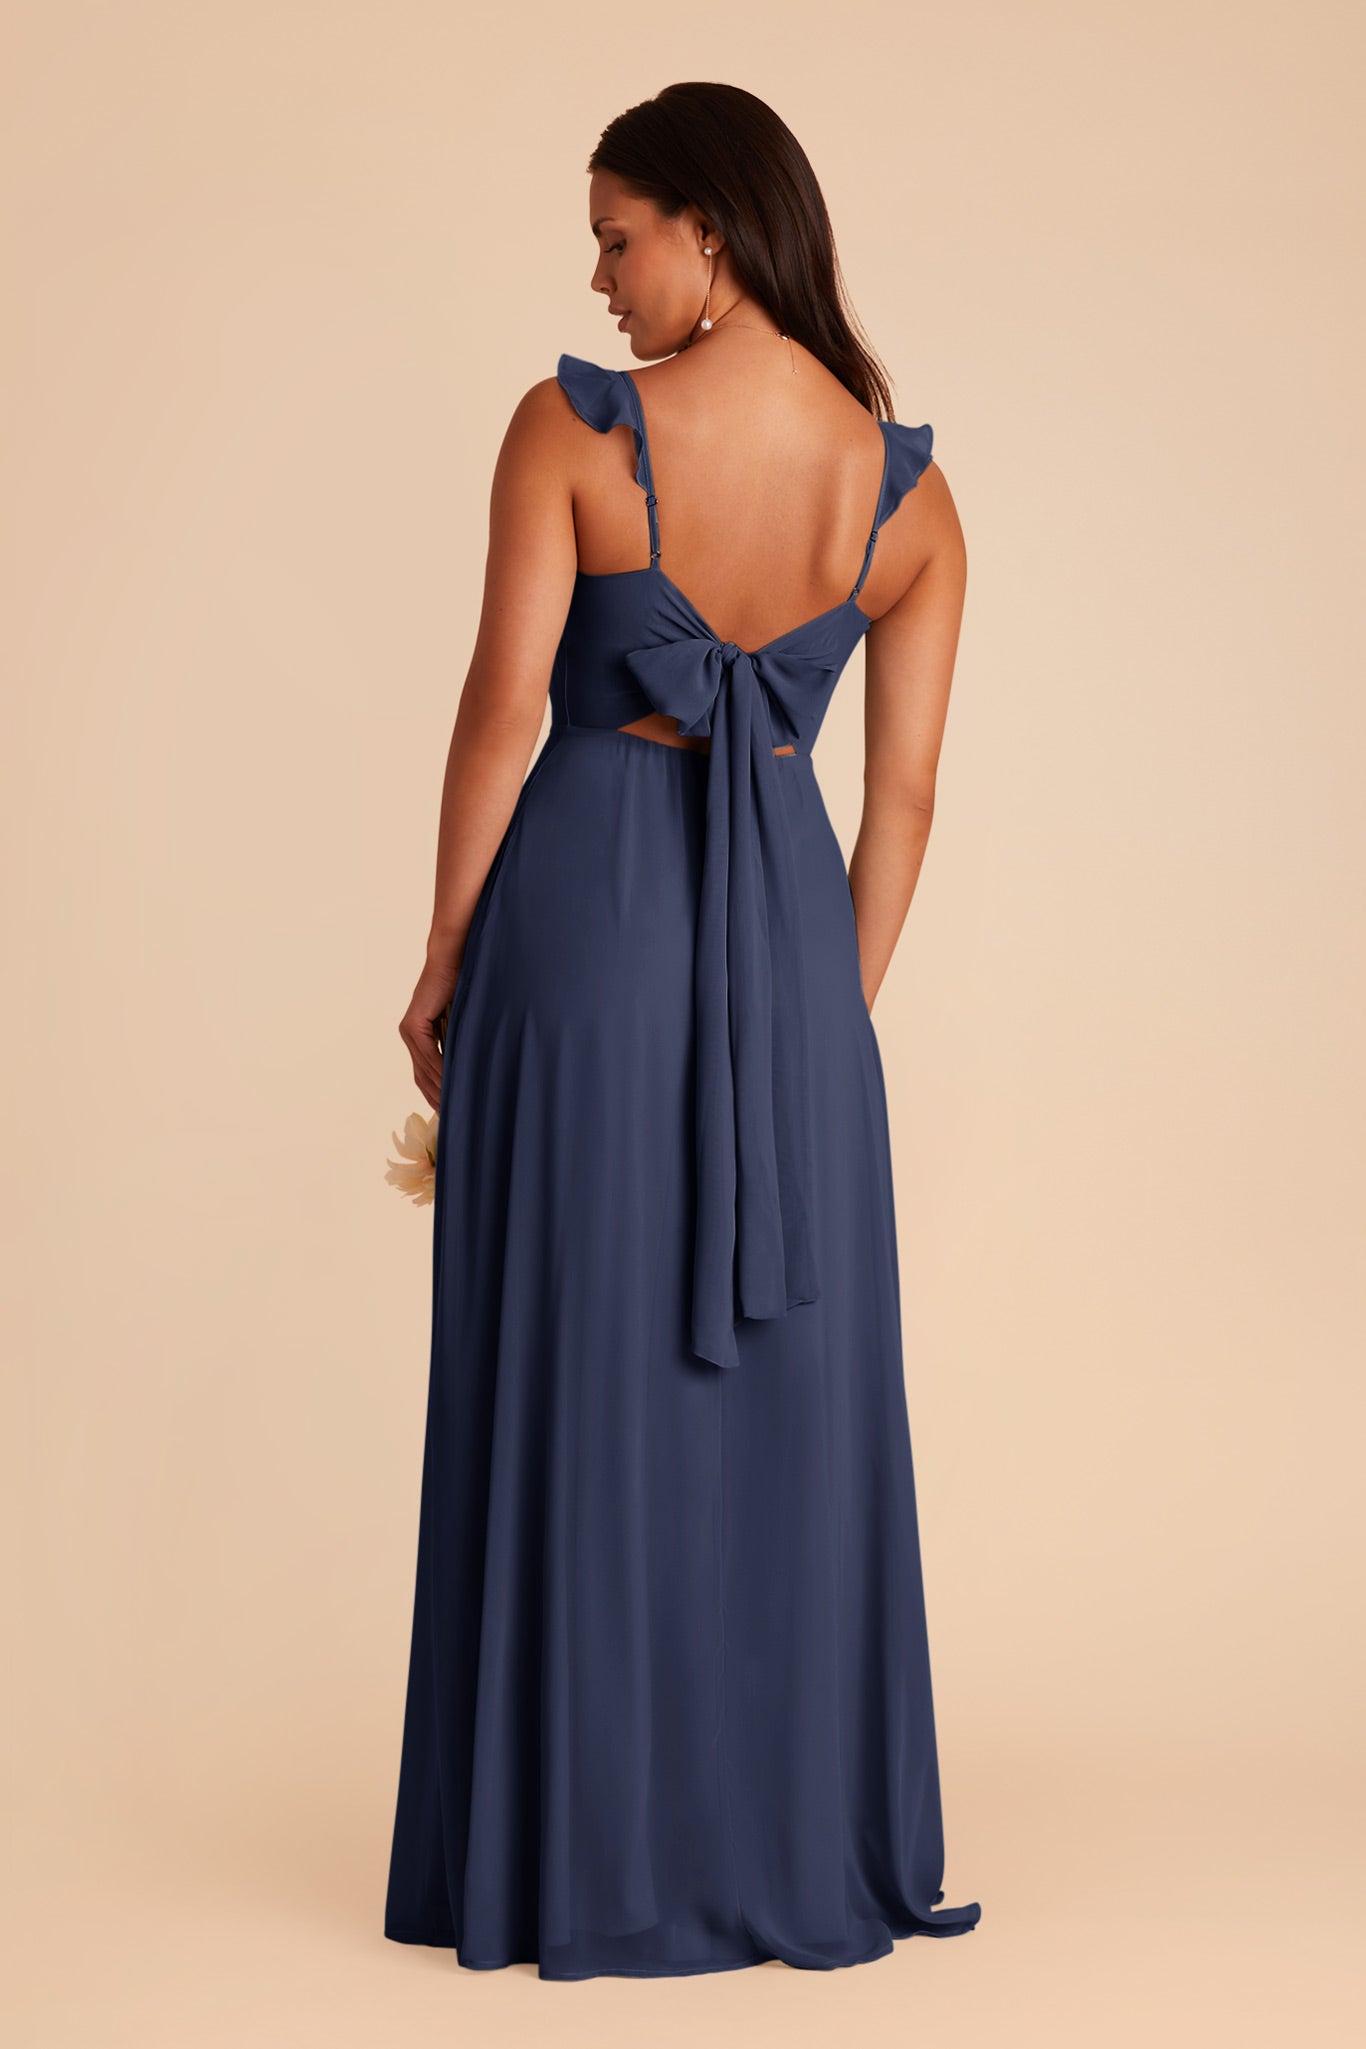 Slate Blue Doris Chiffon Dress by Birdy Grey